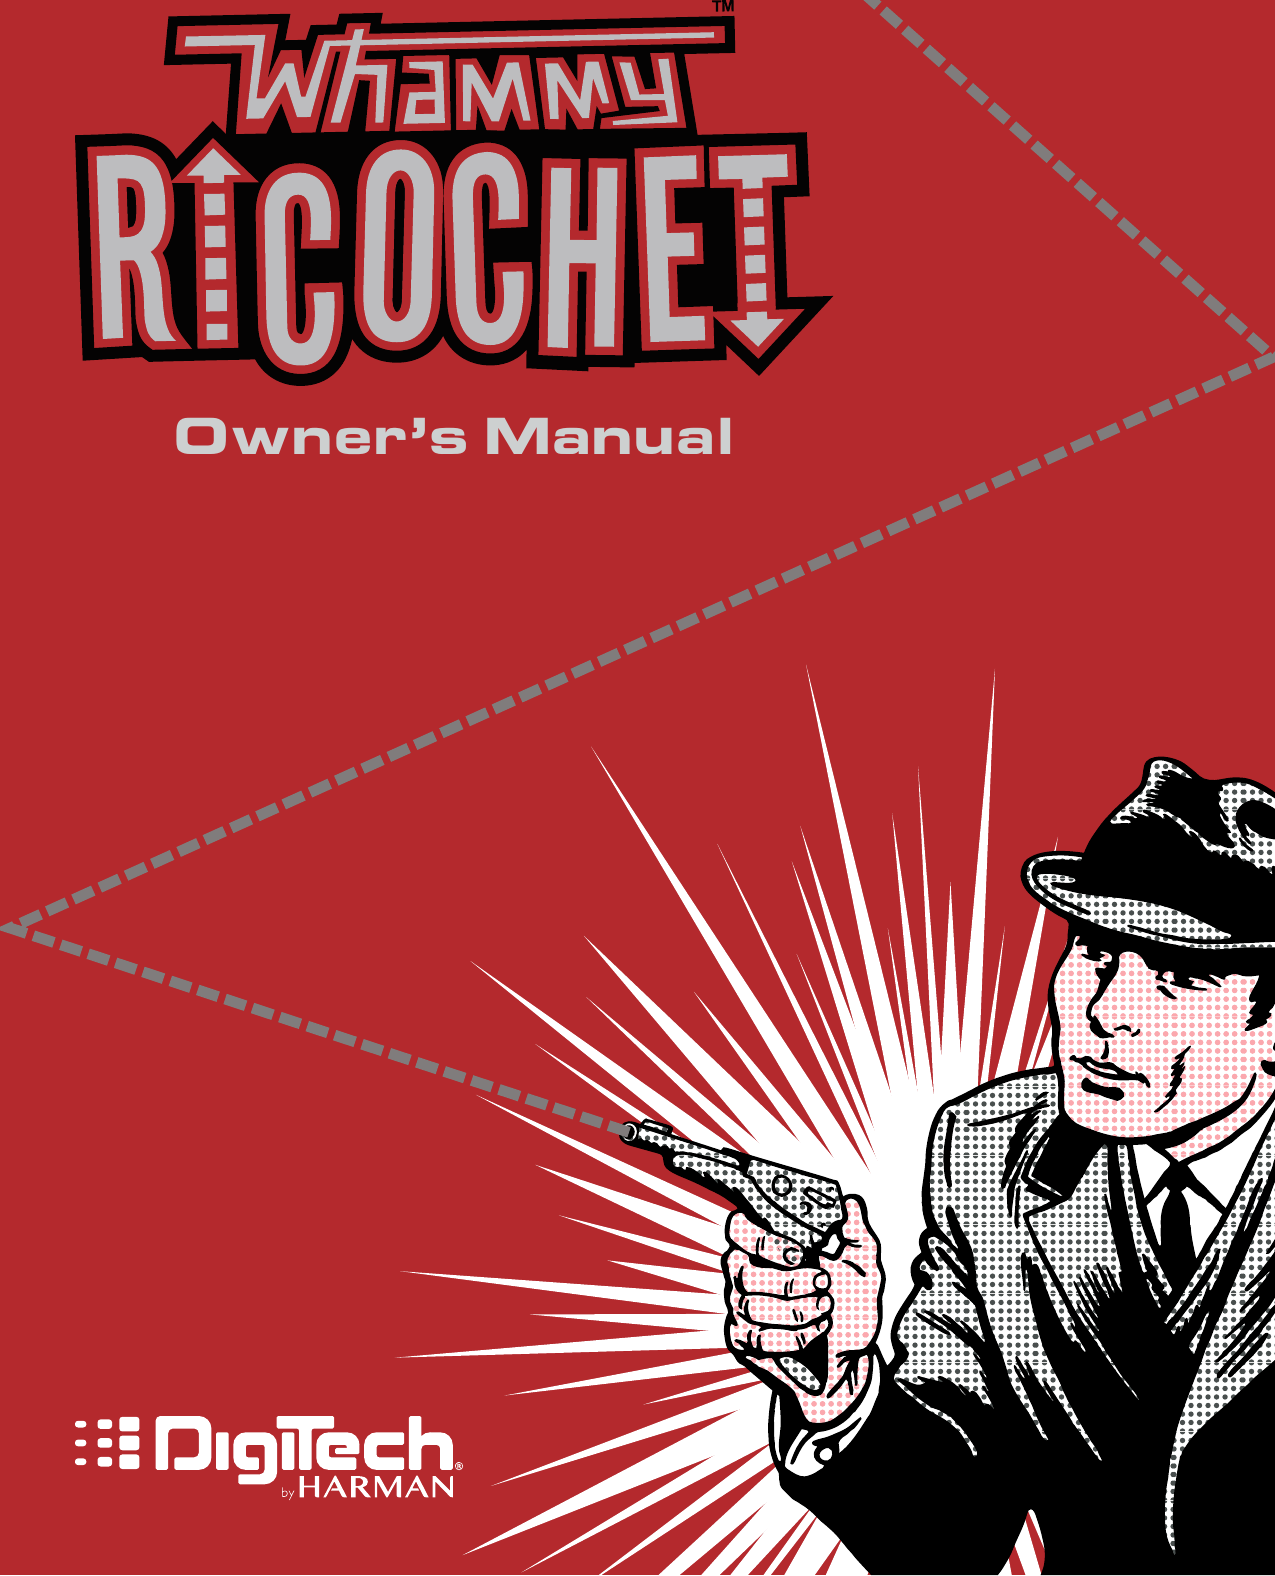 DigiTech Whammy Ricochet User Manual To The Dbd866c6 0a07 46be 